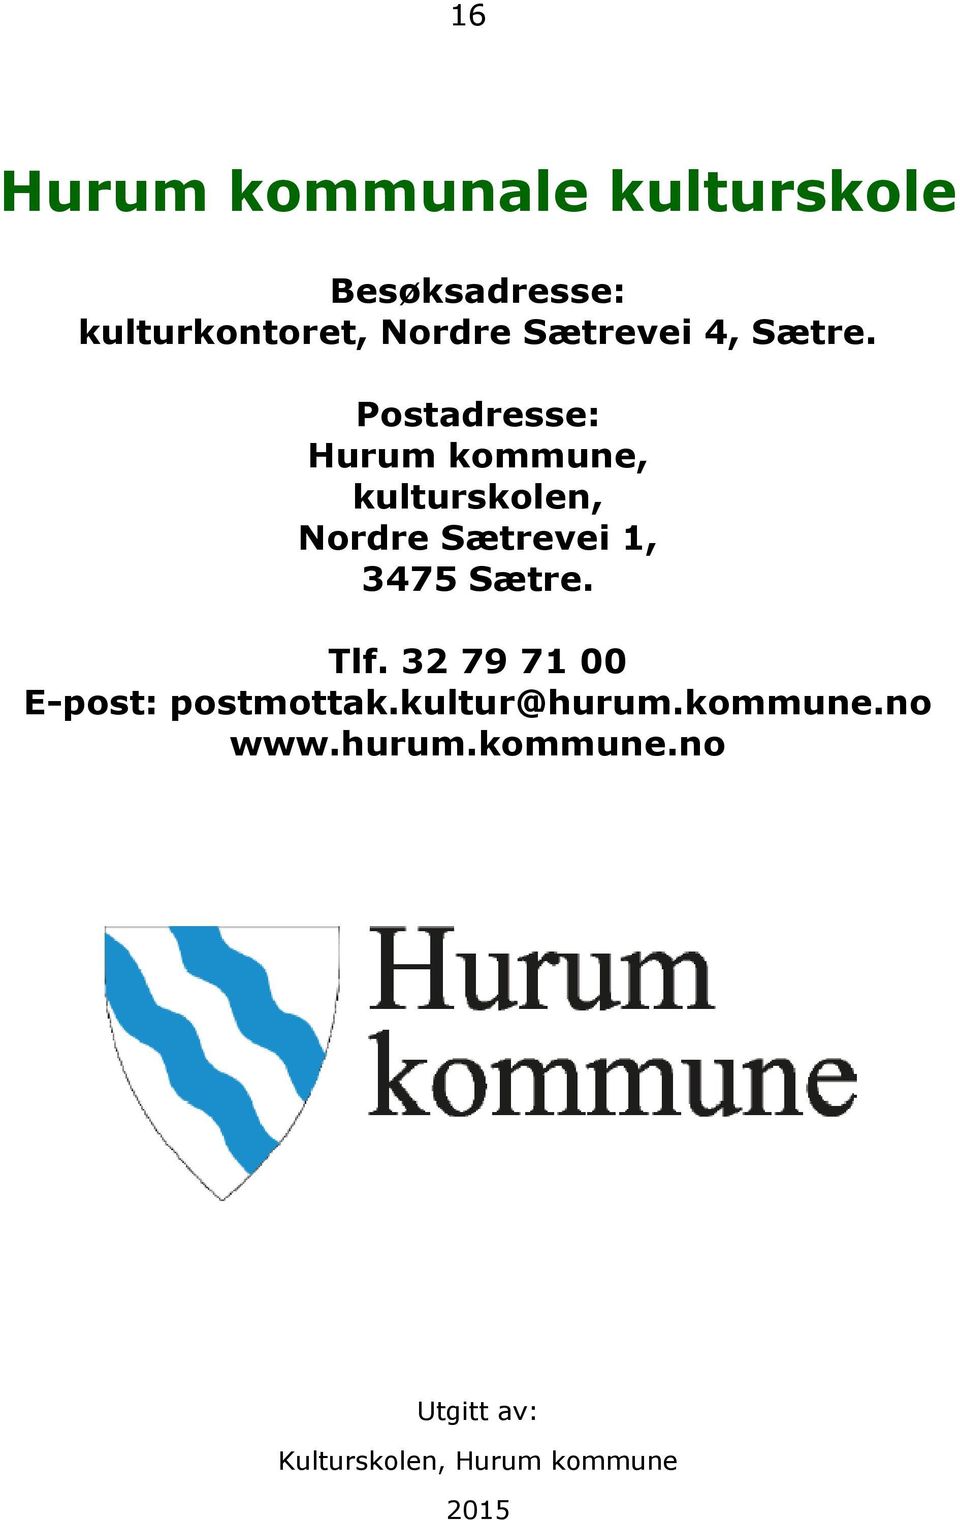 Postadresse: Hurum kommune, kulturskolen, Nordre Sætrevei 1, 3475 Sætre.